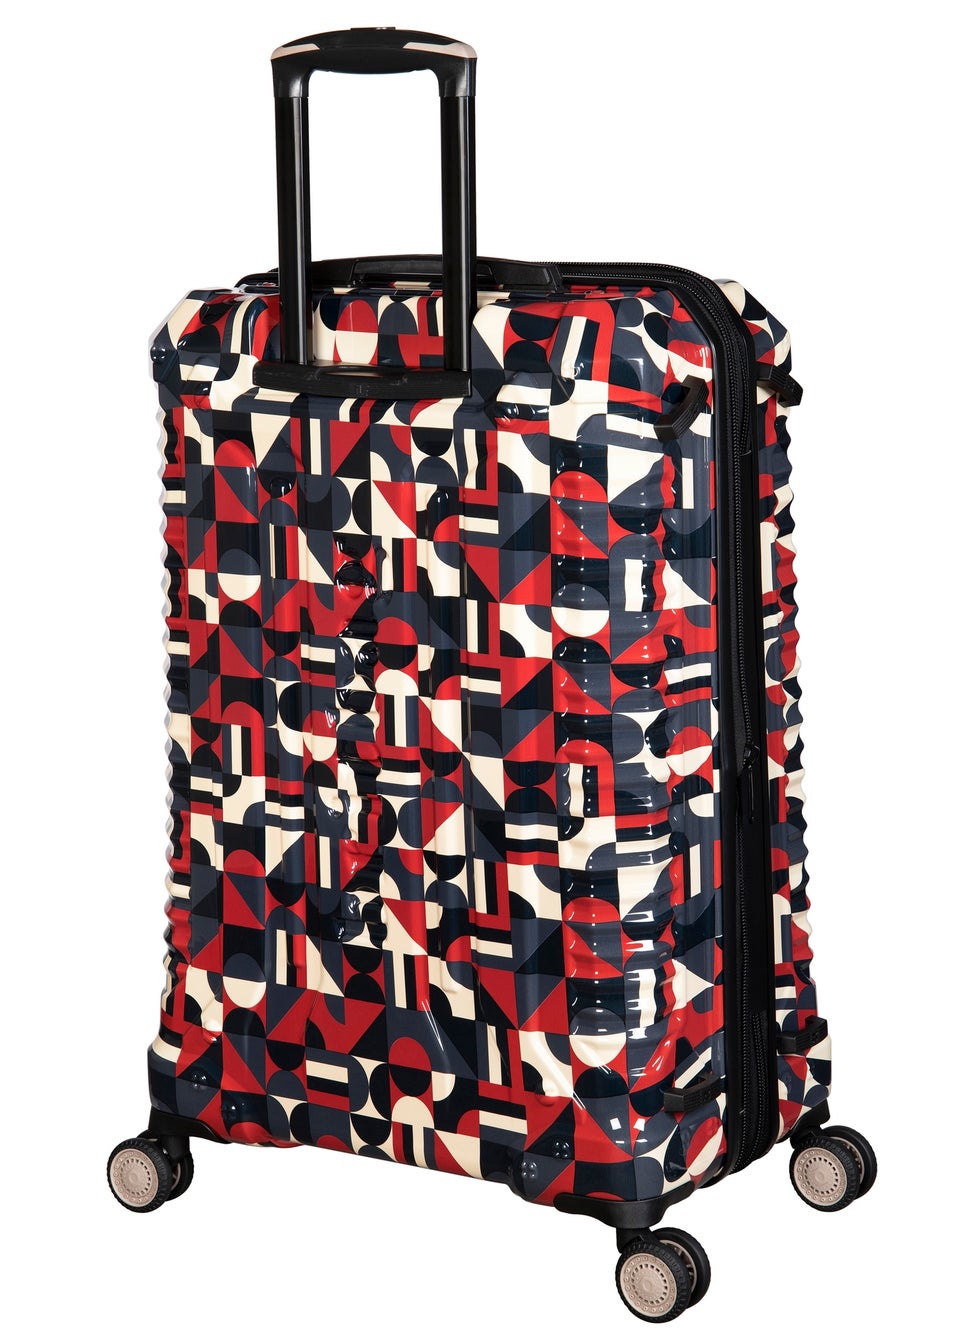 BritBag Annamite Skin Black/Red Geo Print Suitcase with TSA Lock